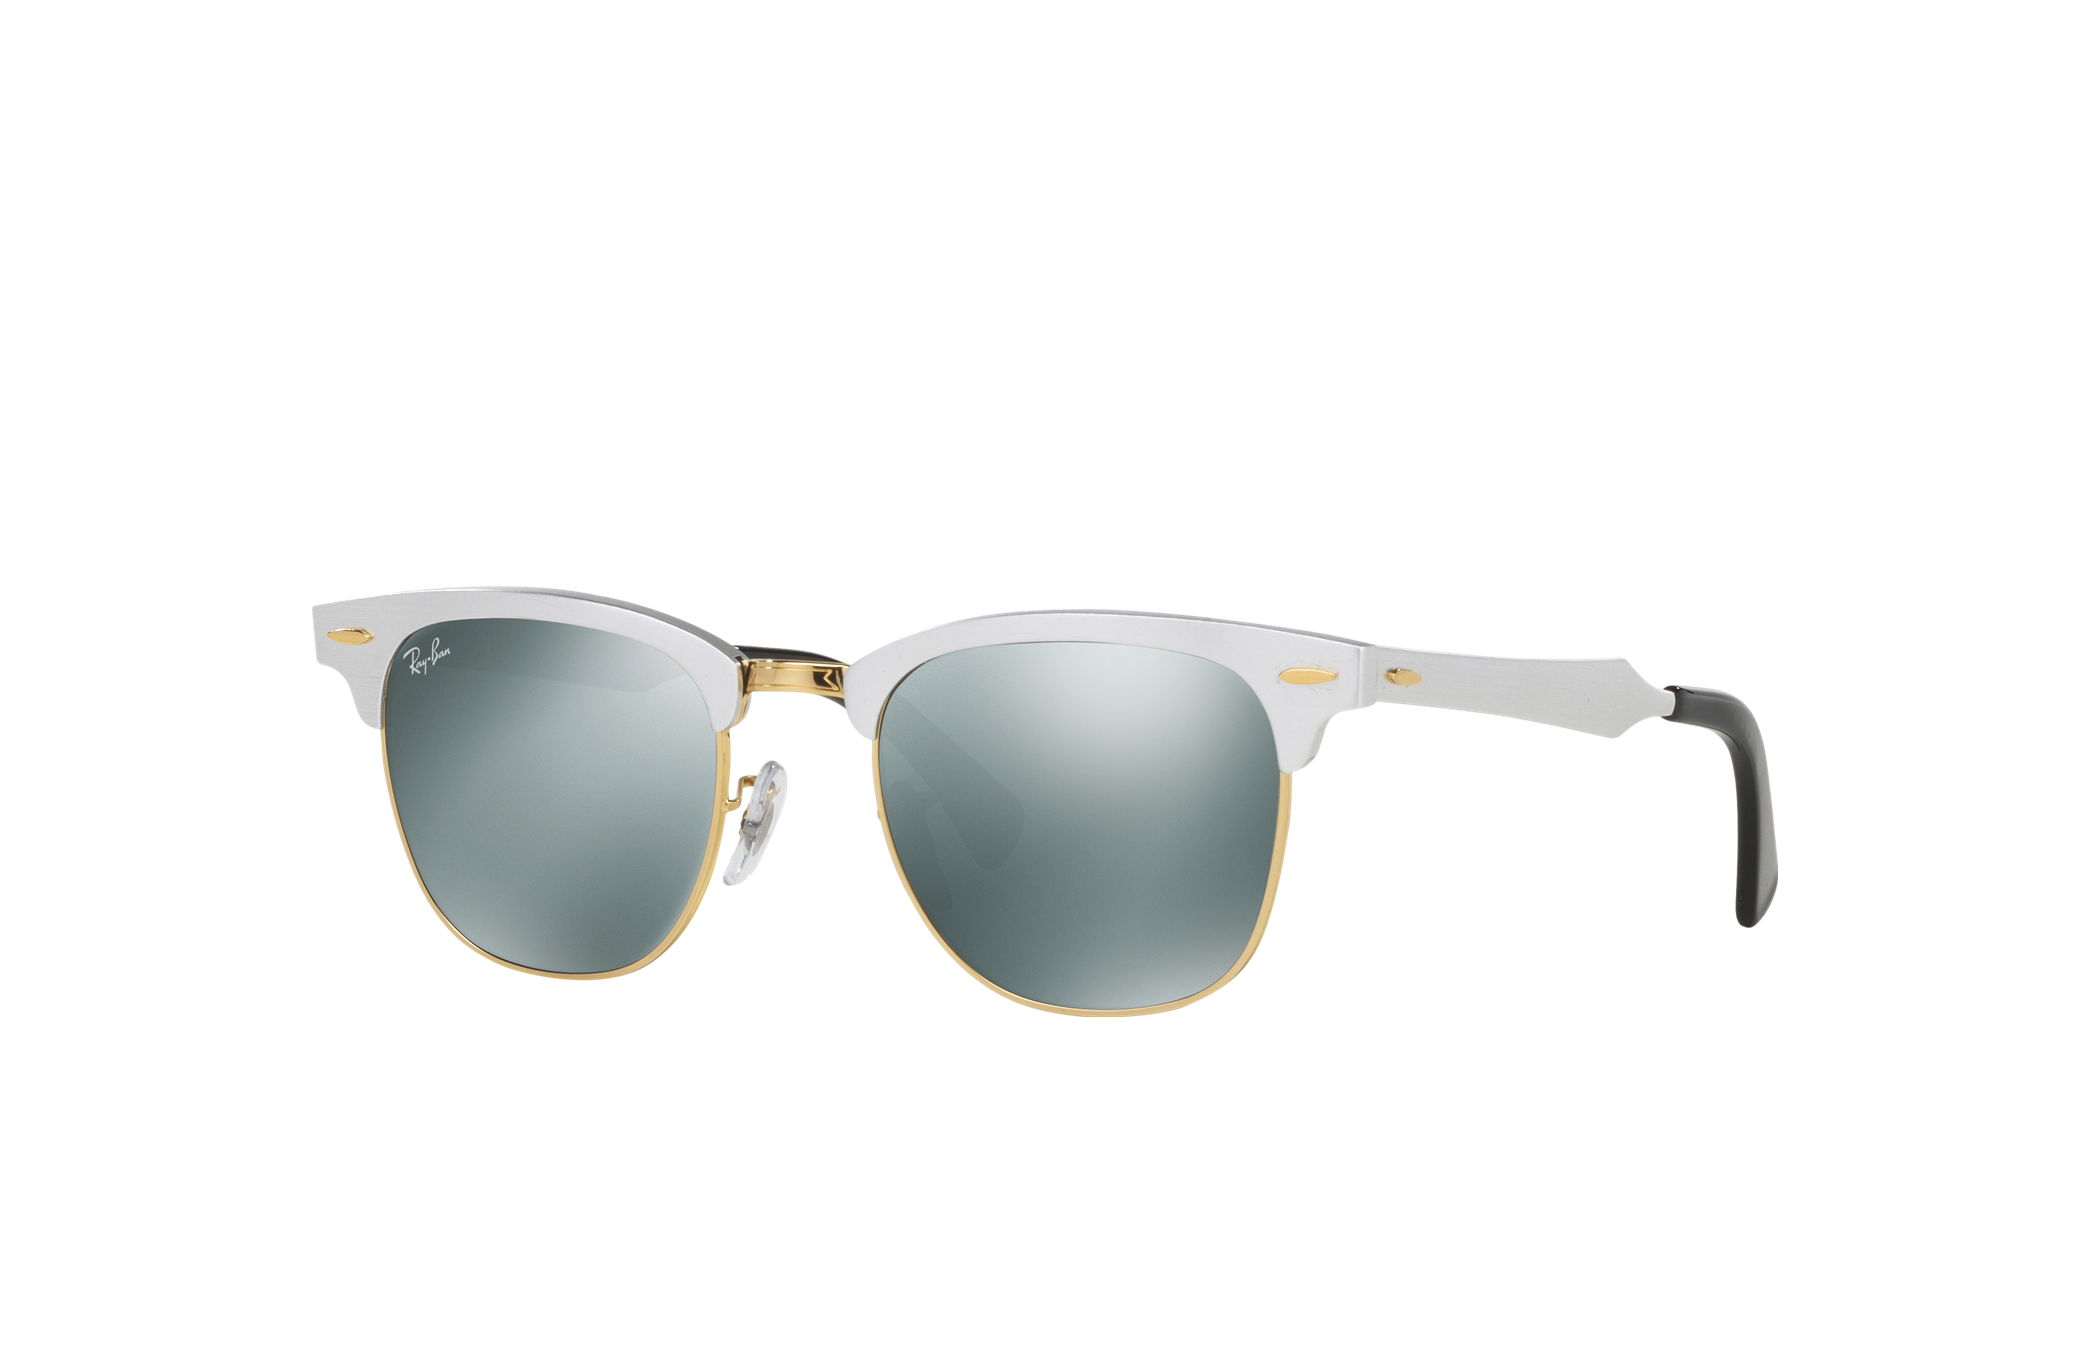 Ray-Ban Clubmaster Aluminum Sunglasses